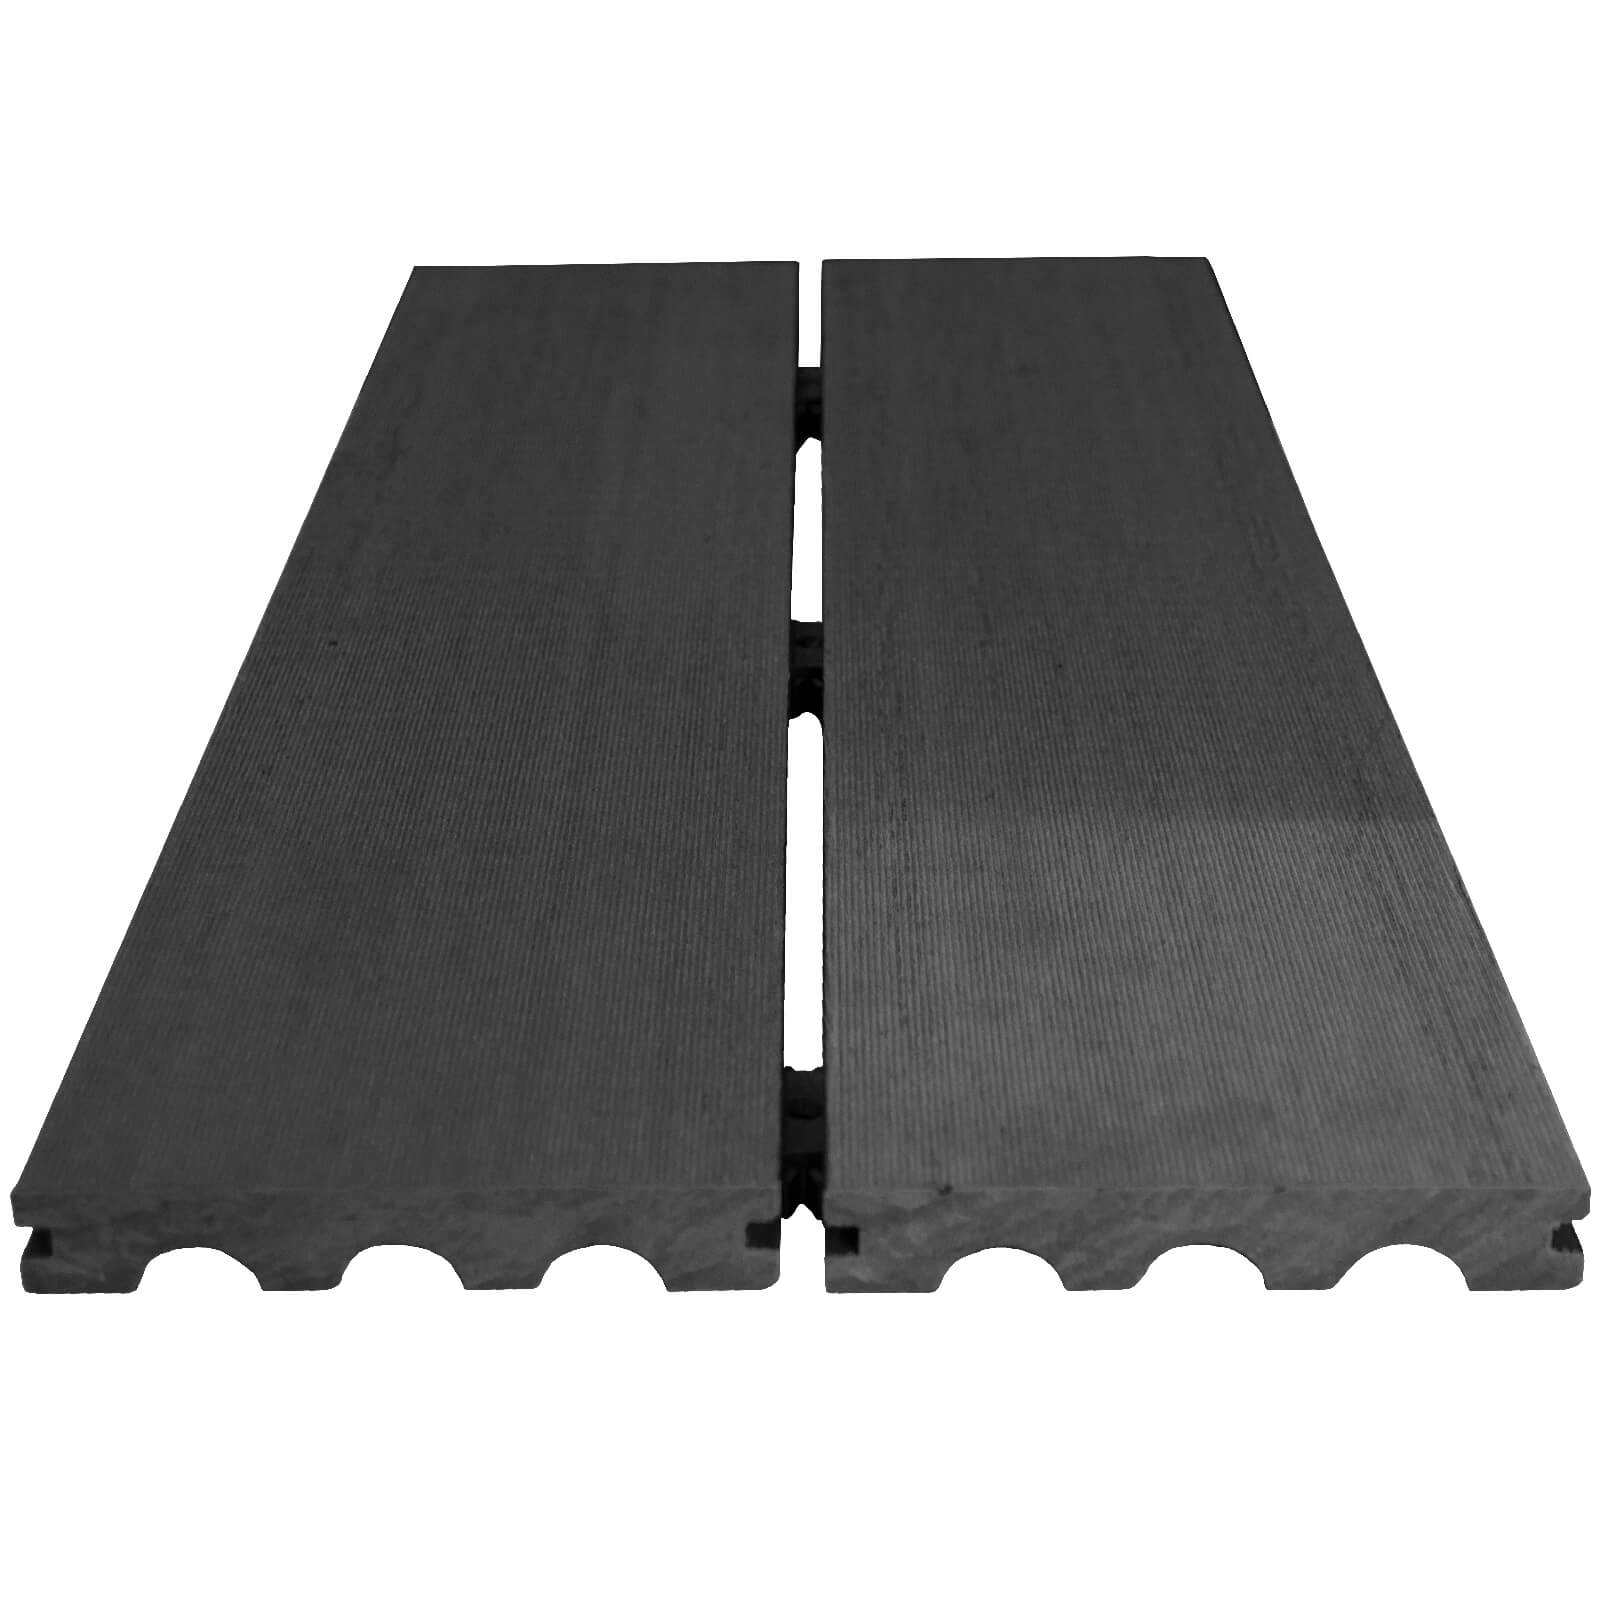 Bridge Board Composite Decking - 3 Pack - Ebony - 1.04 m2